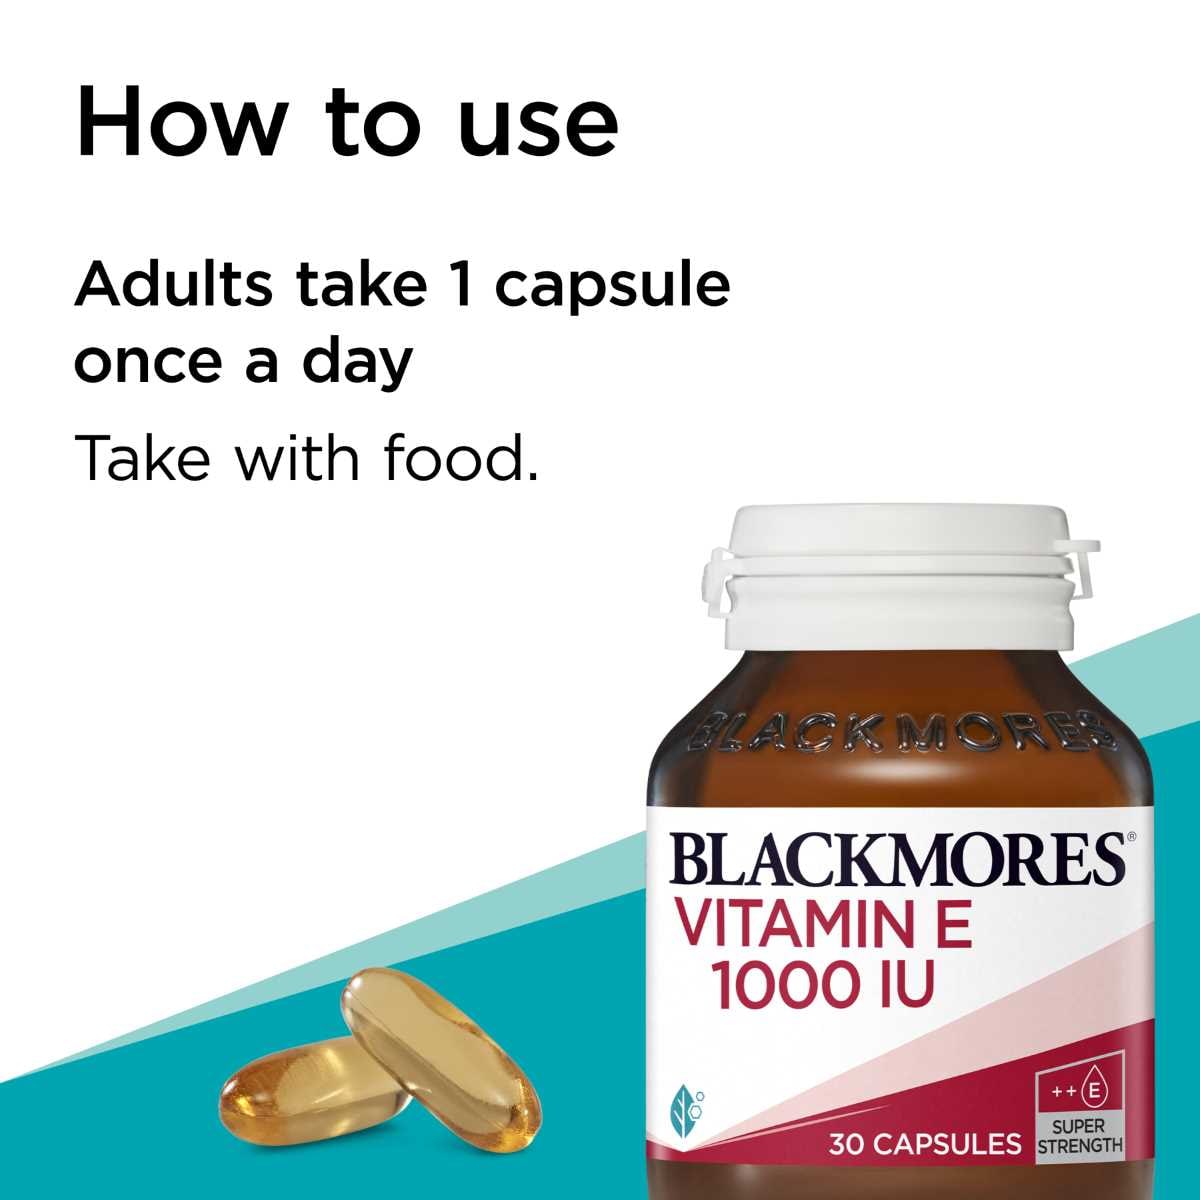 Blackmores Vitamin E 1000IU 30 Capsules